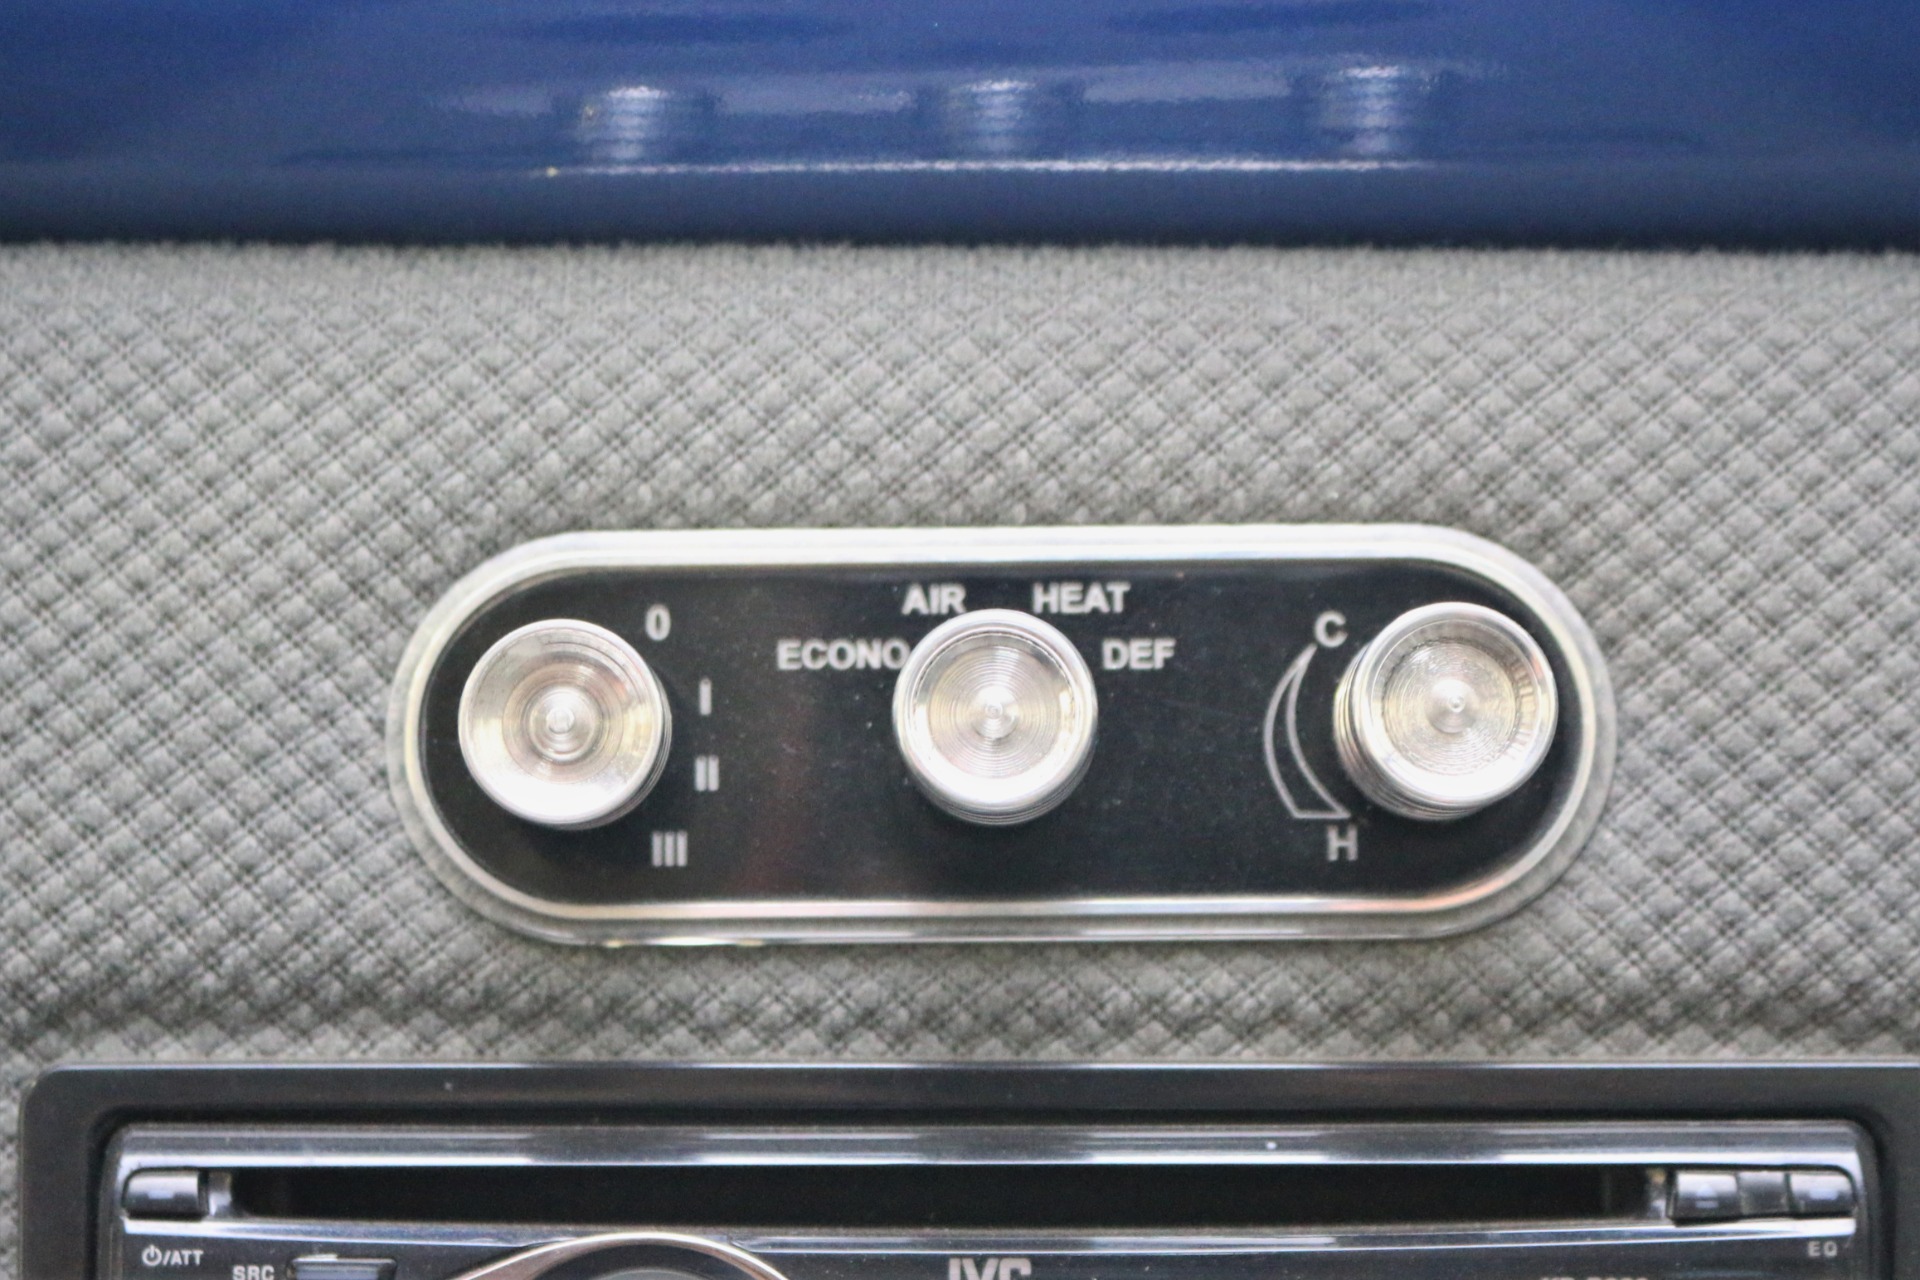 Used-1956-Chevrolet-Pickup